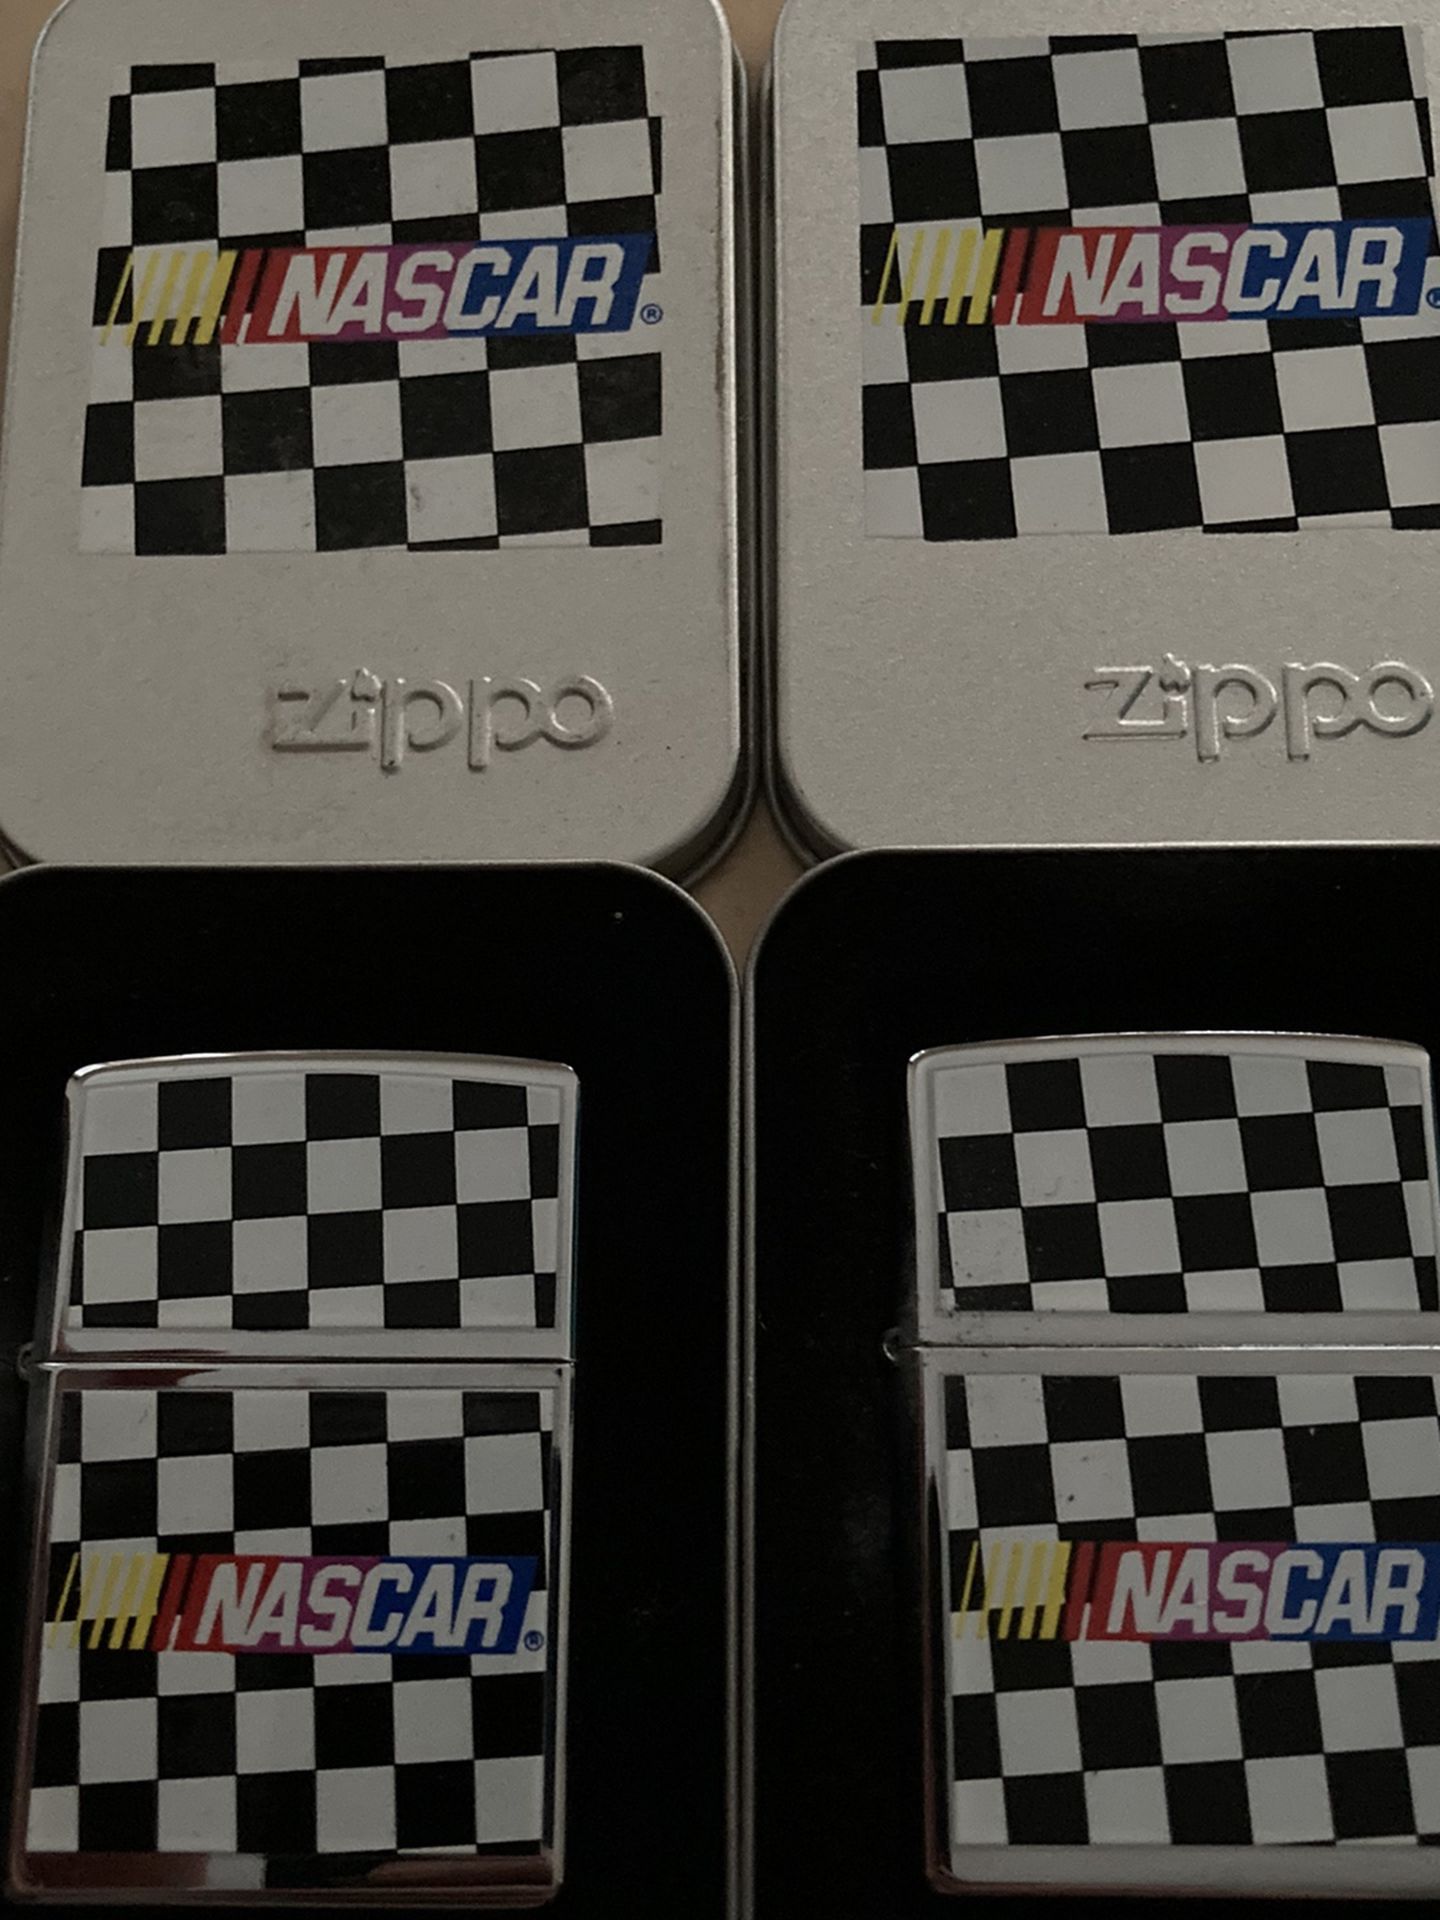 NASCAR Zippo Lighters